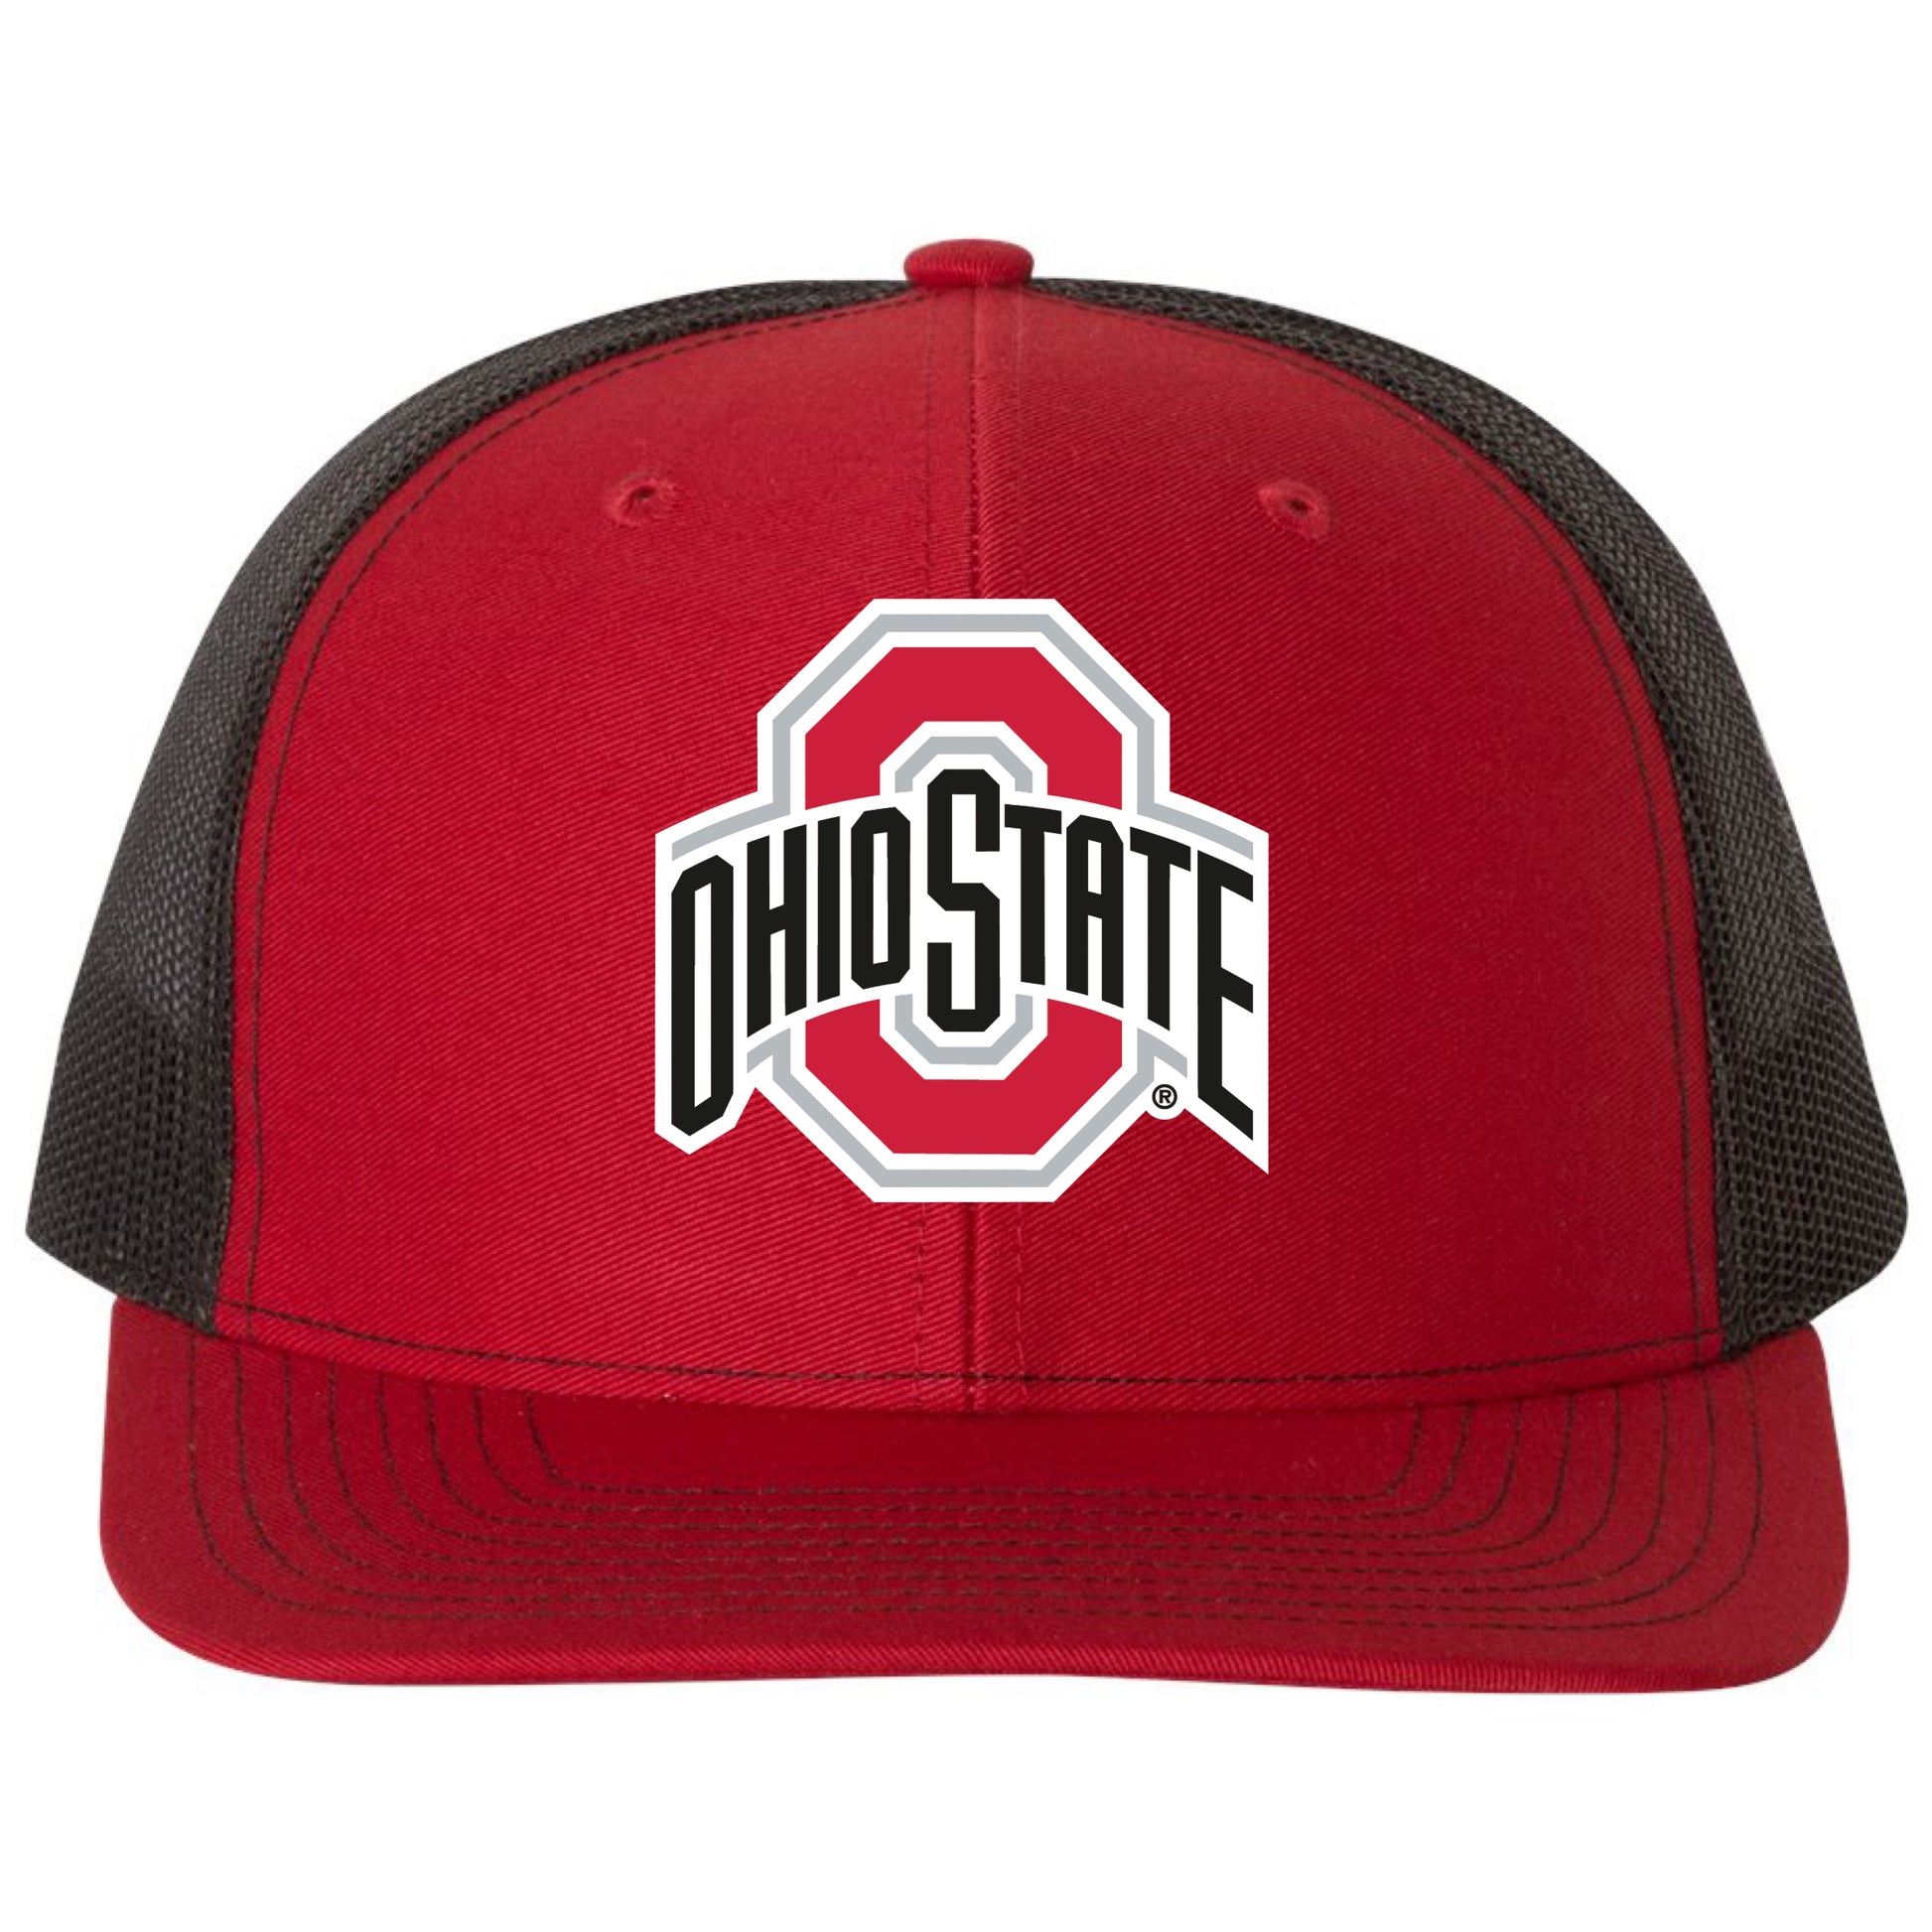 Ohio State Buckeyes 3D Snapback Trucker Hat- Red/ Black - Ten Gallon Hat Co.